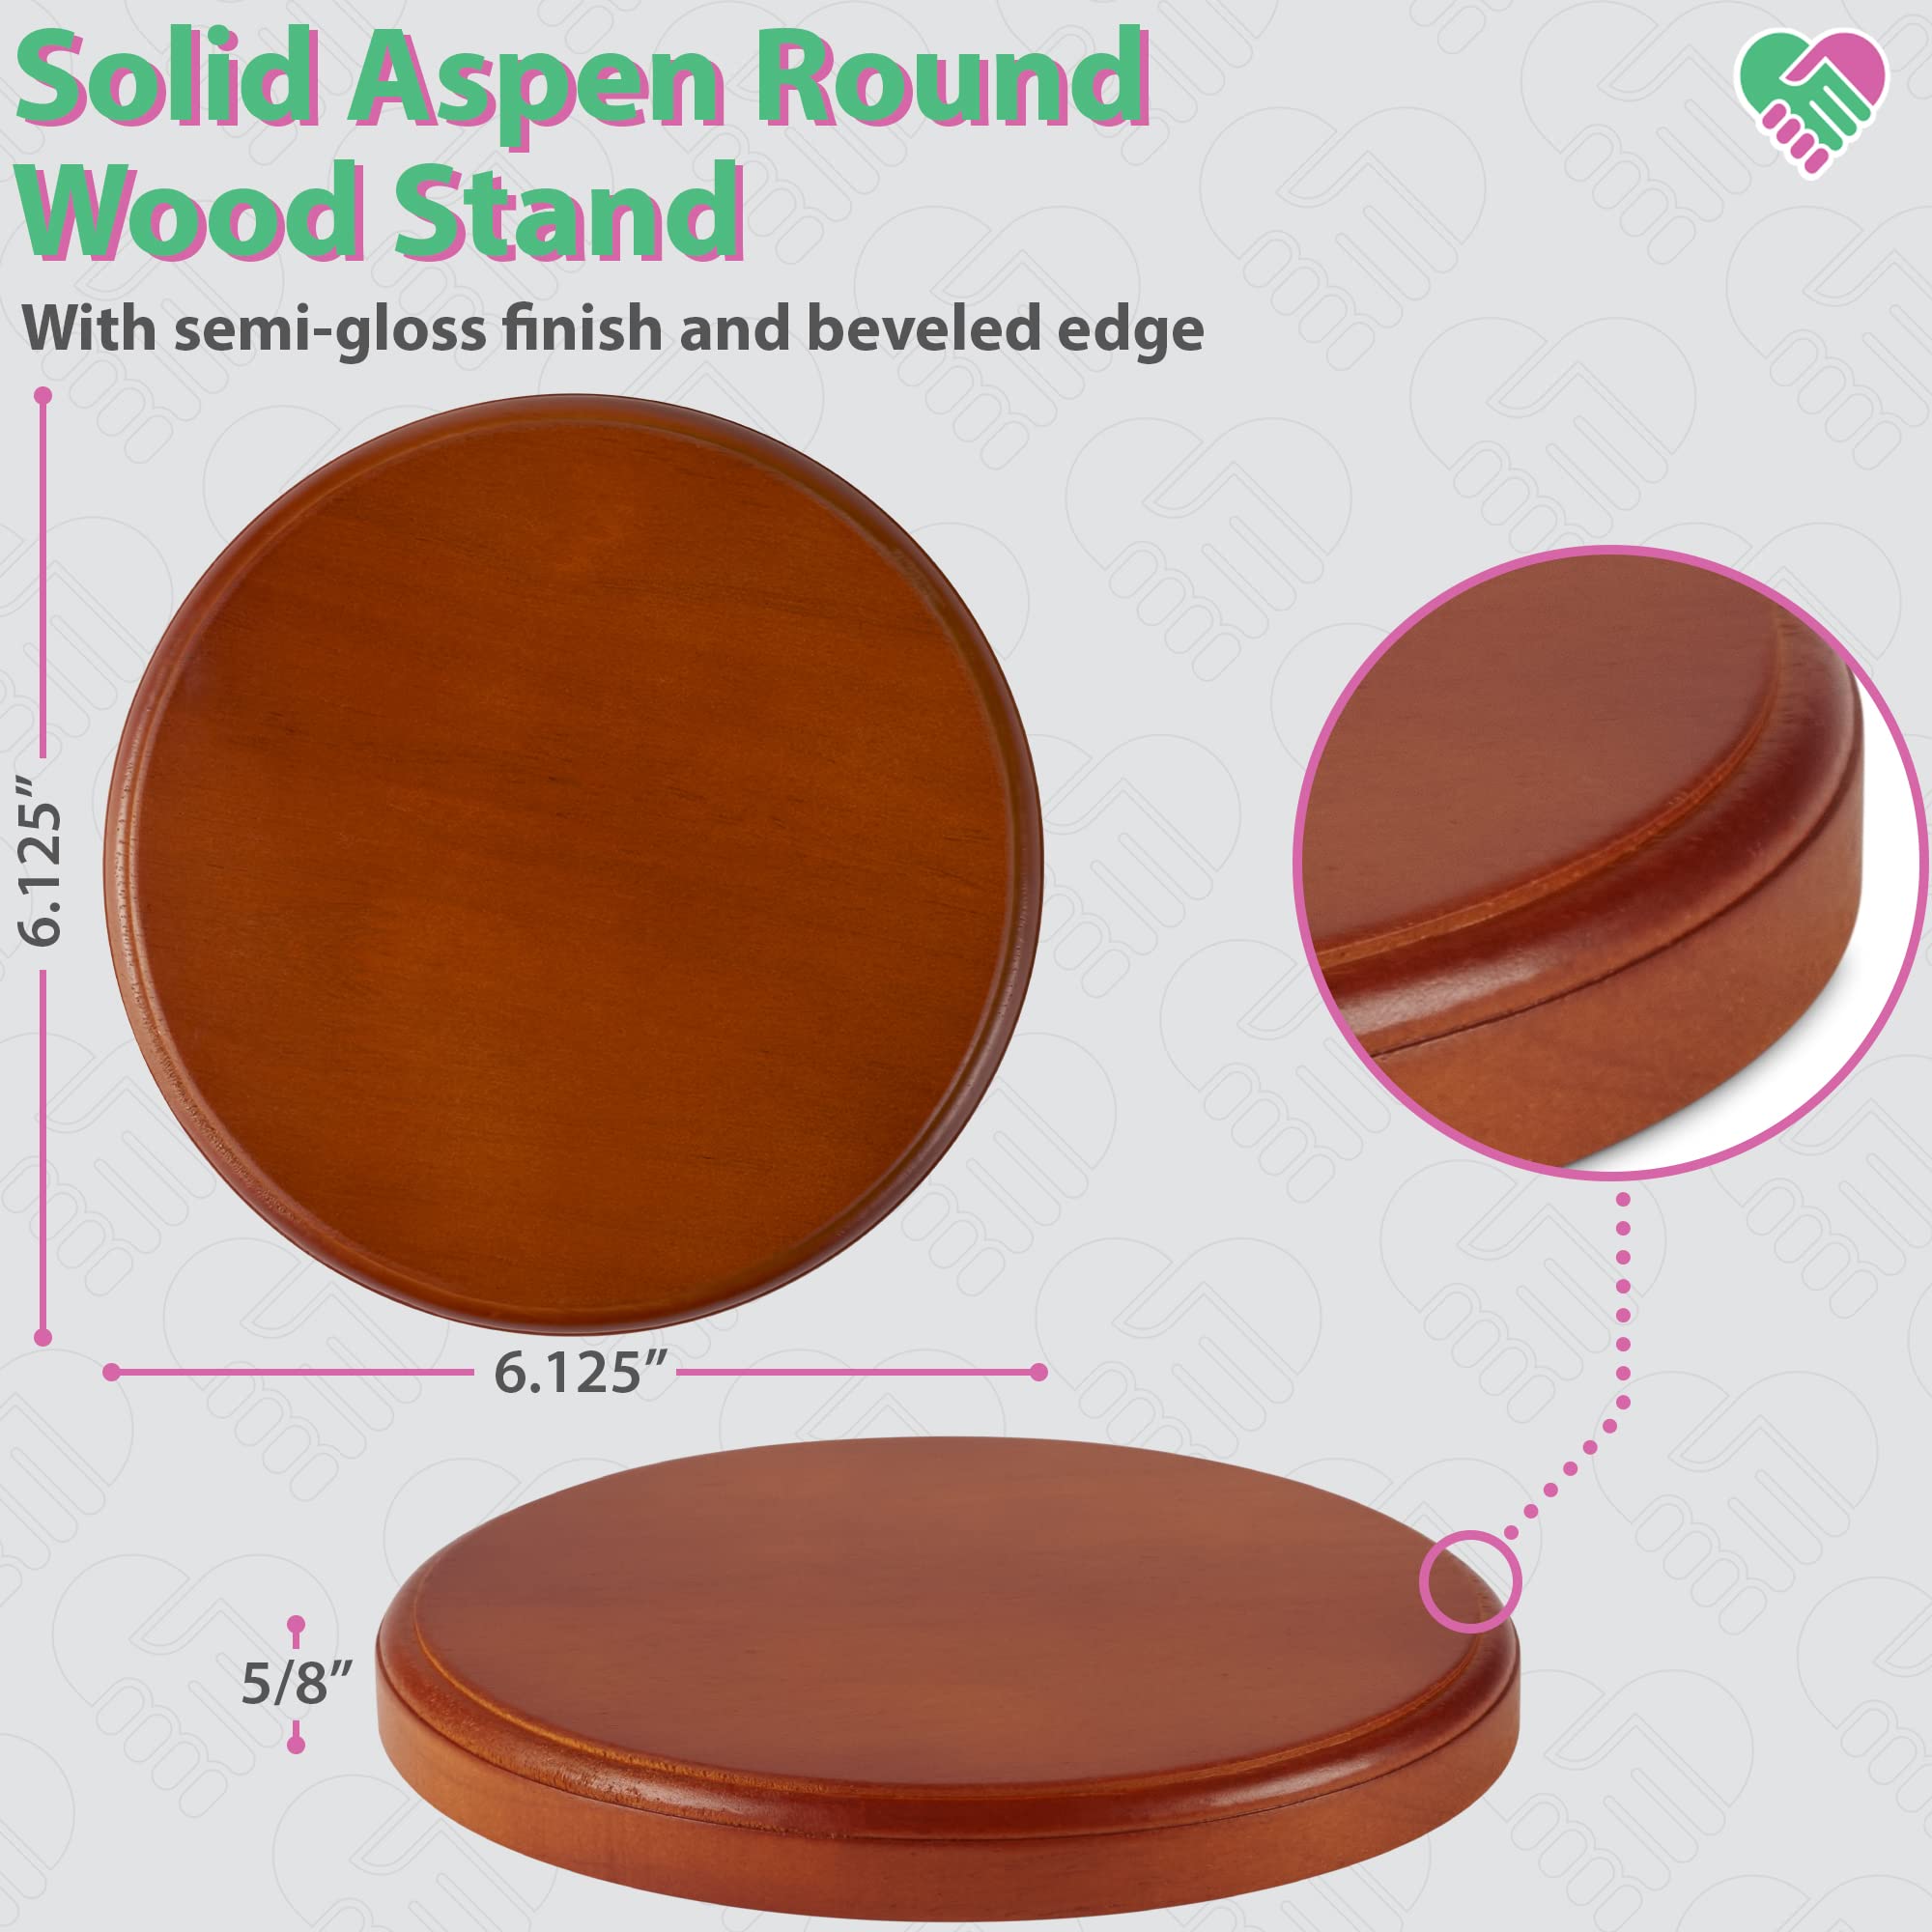 Luna Bean Display Base – 100% Wood, Round Design for Elegant Home Décor